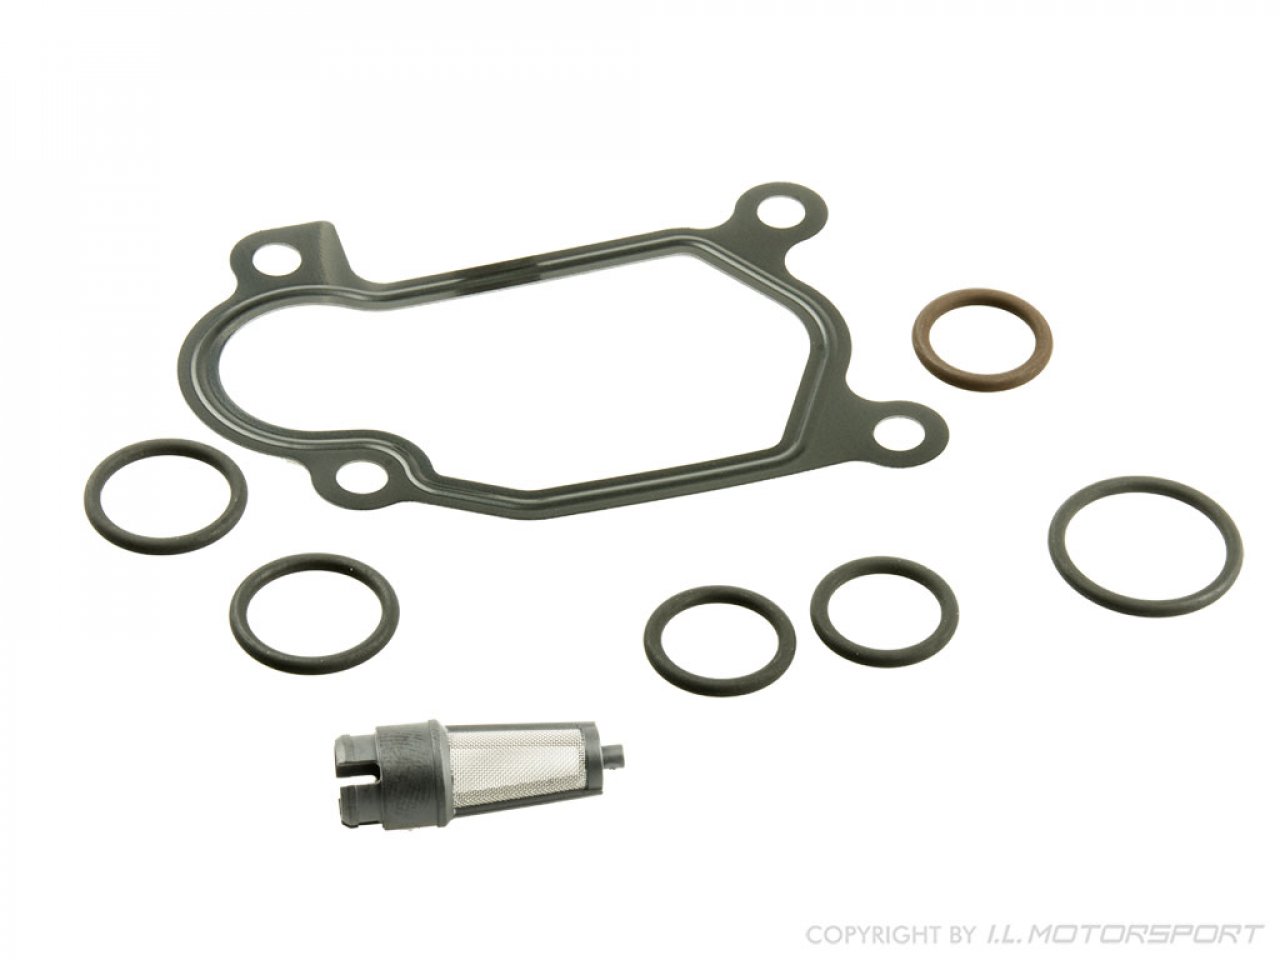 OEM Honda TRX350 Rancher Oil Filter Cover Sealing O-Ring Set (2) | eBay